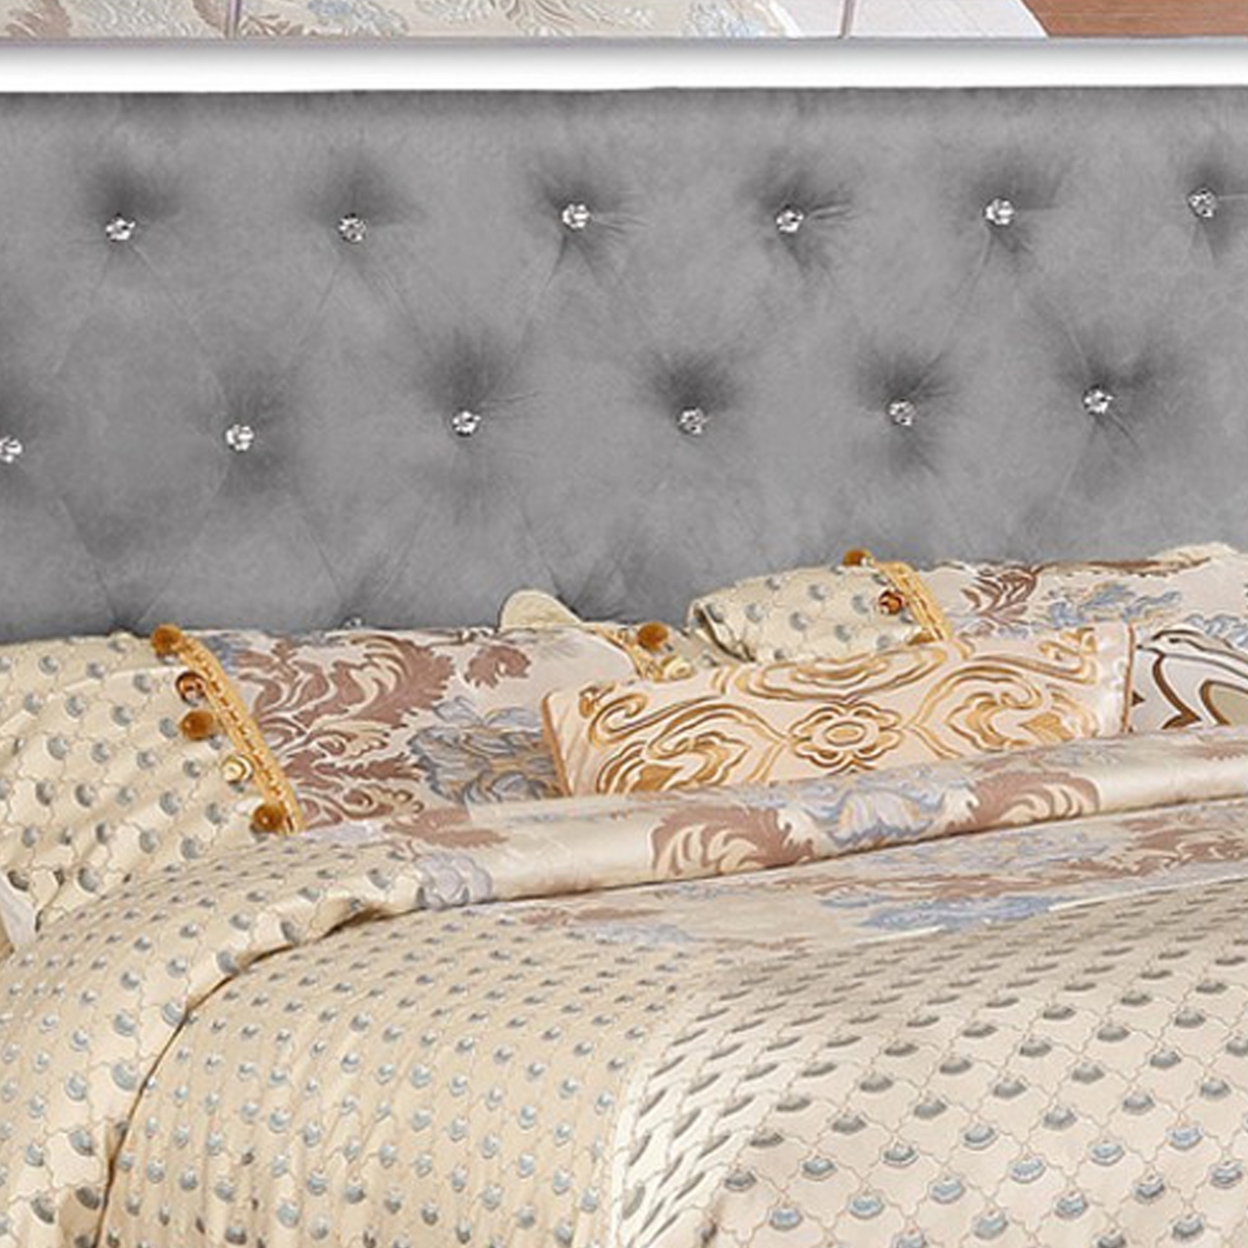 Eli Crystal Tufted Queen Bed, LED, Mirror Inlays, Wood, Gray Velvet, Silver- Saltoro Sherpi